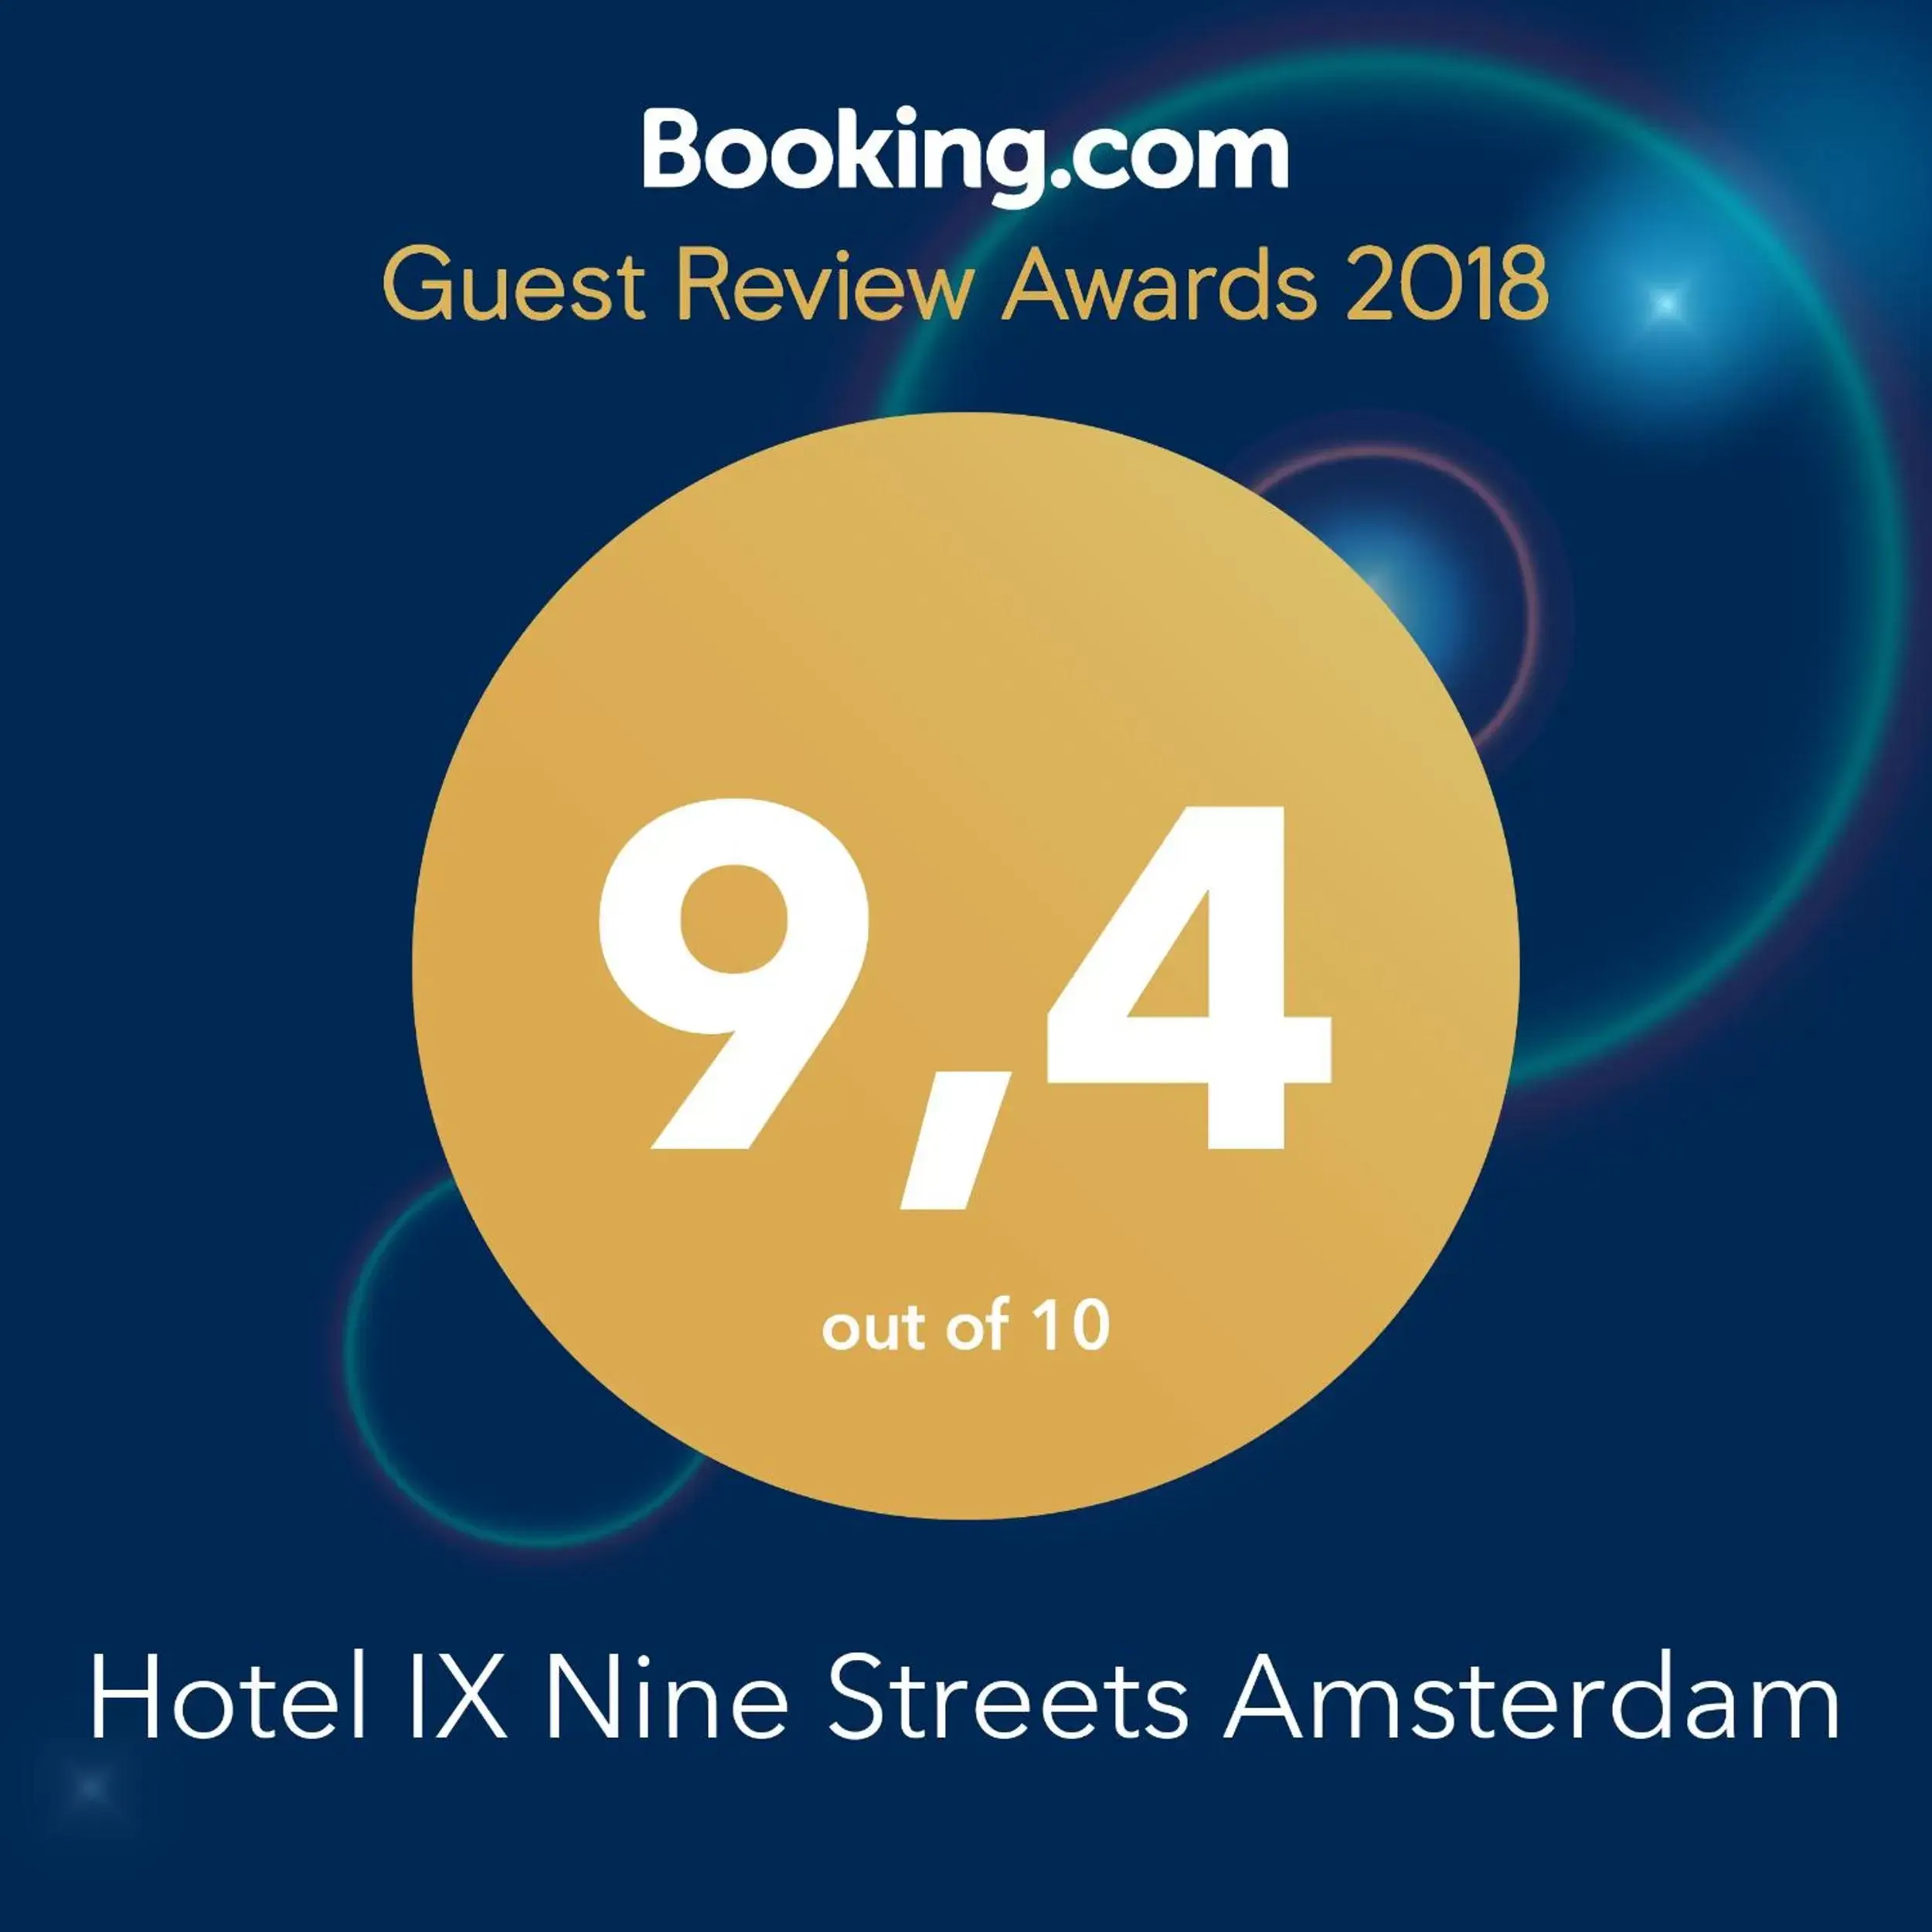 Certificate/Award in Hotel IX Nine Streets Amsterdam